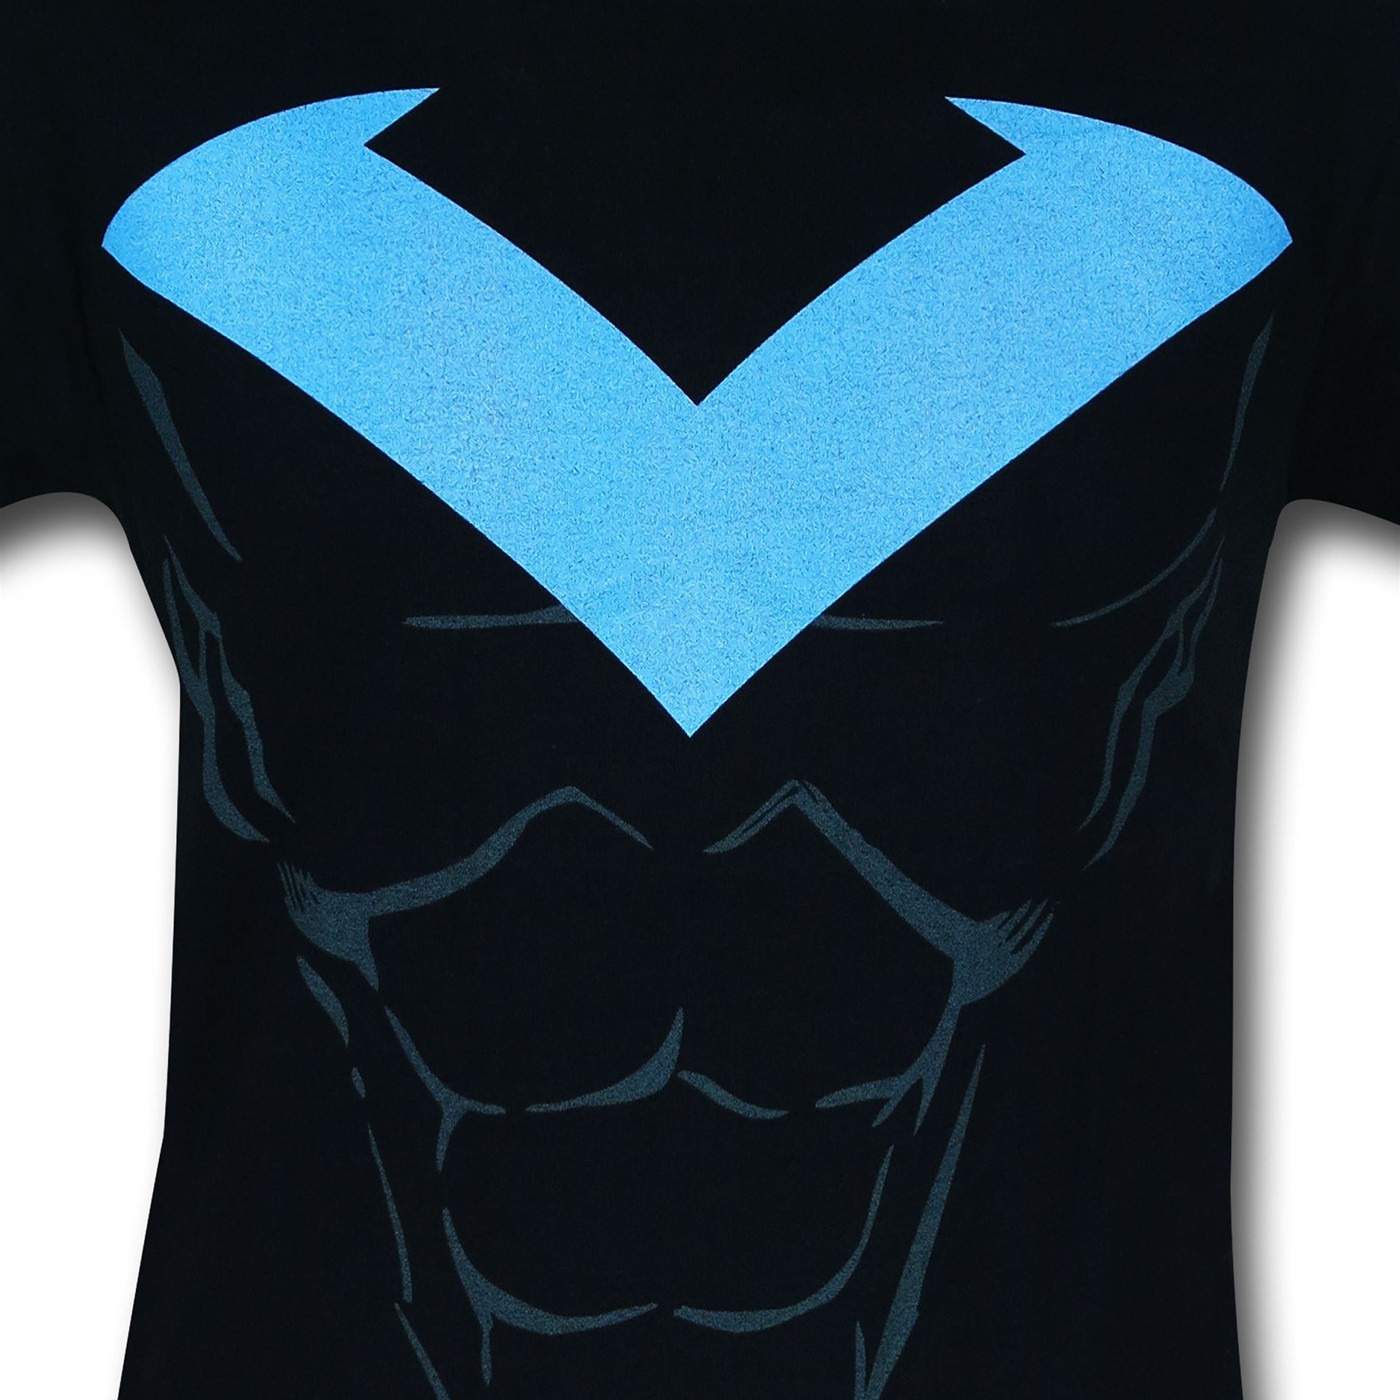 Nightwing Costume T-Shirt